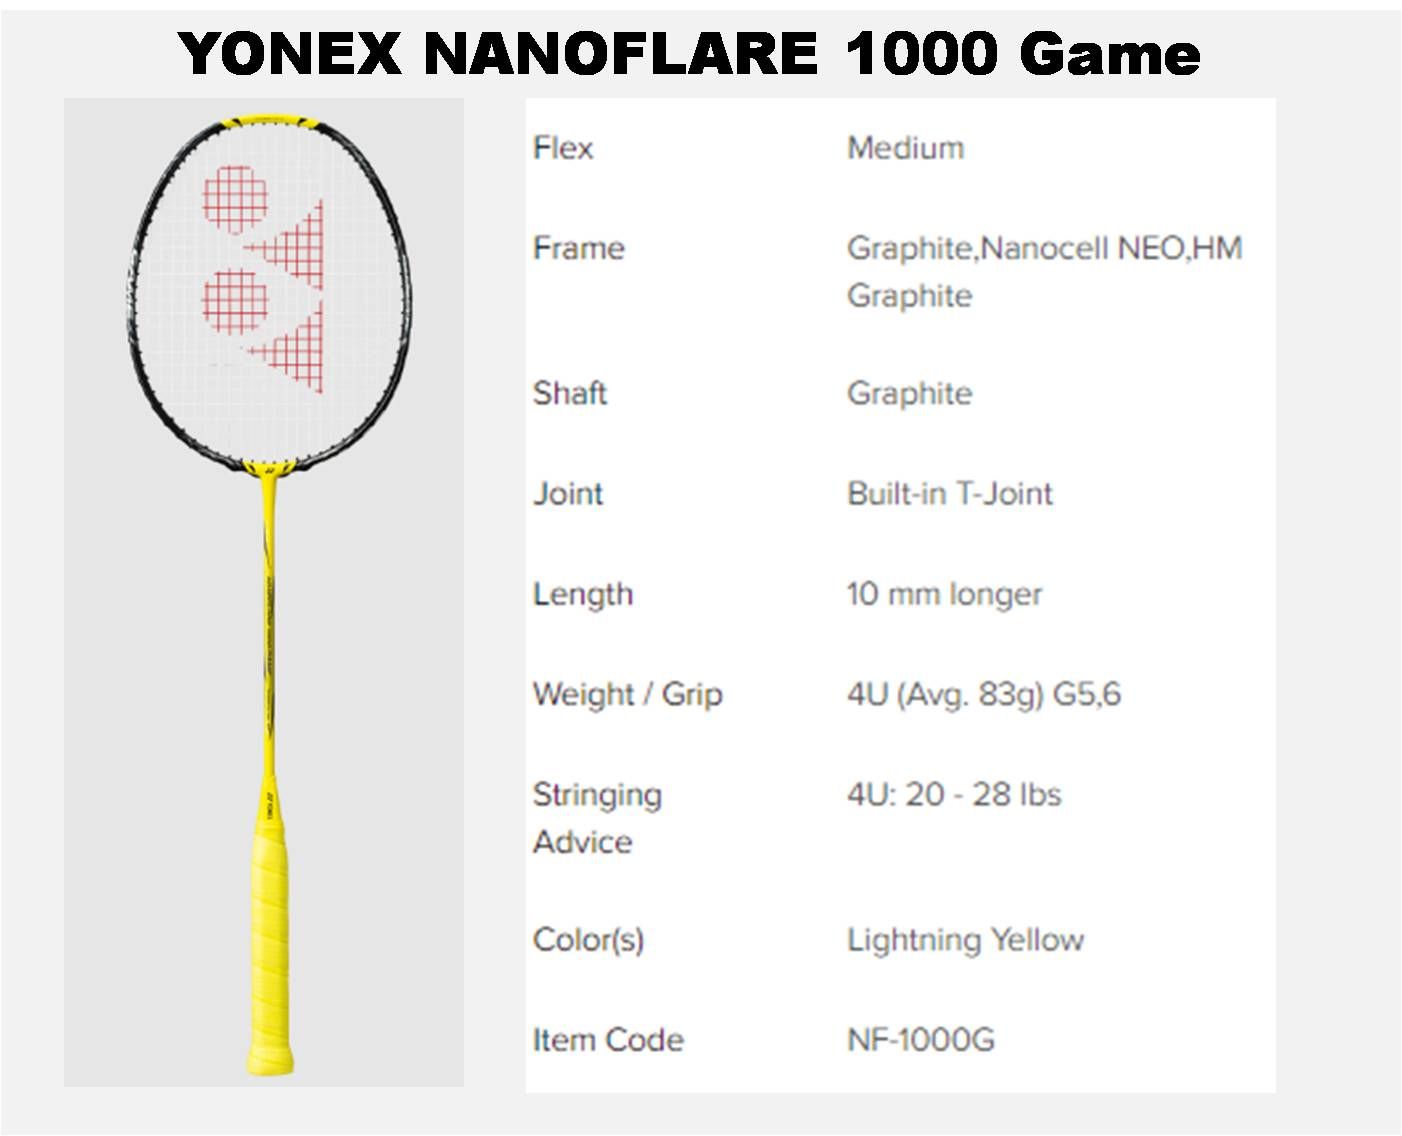 Yonex_nanoflare_1000_game_Specifications